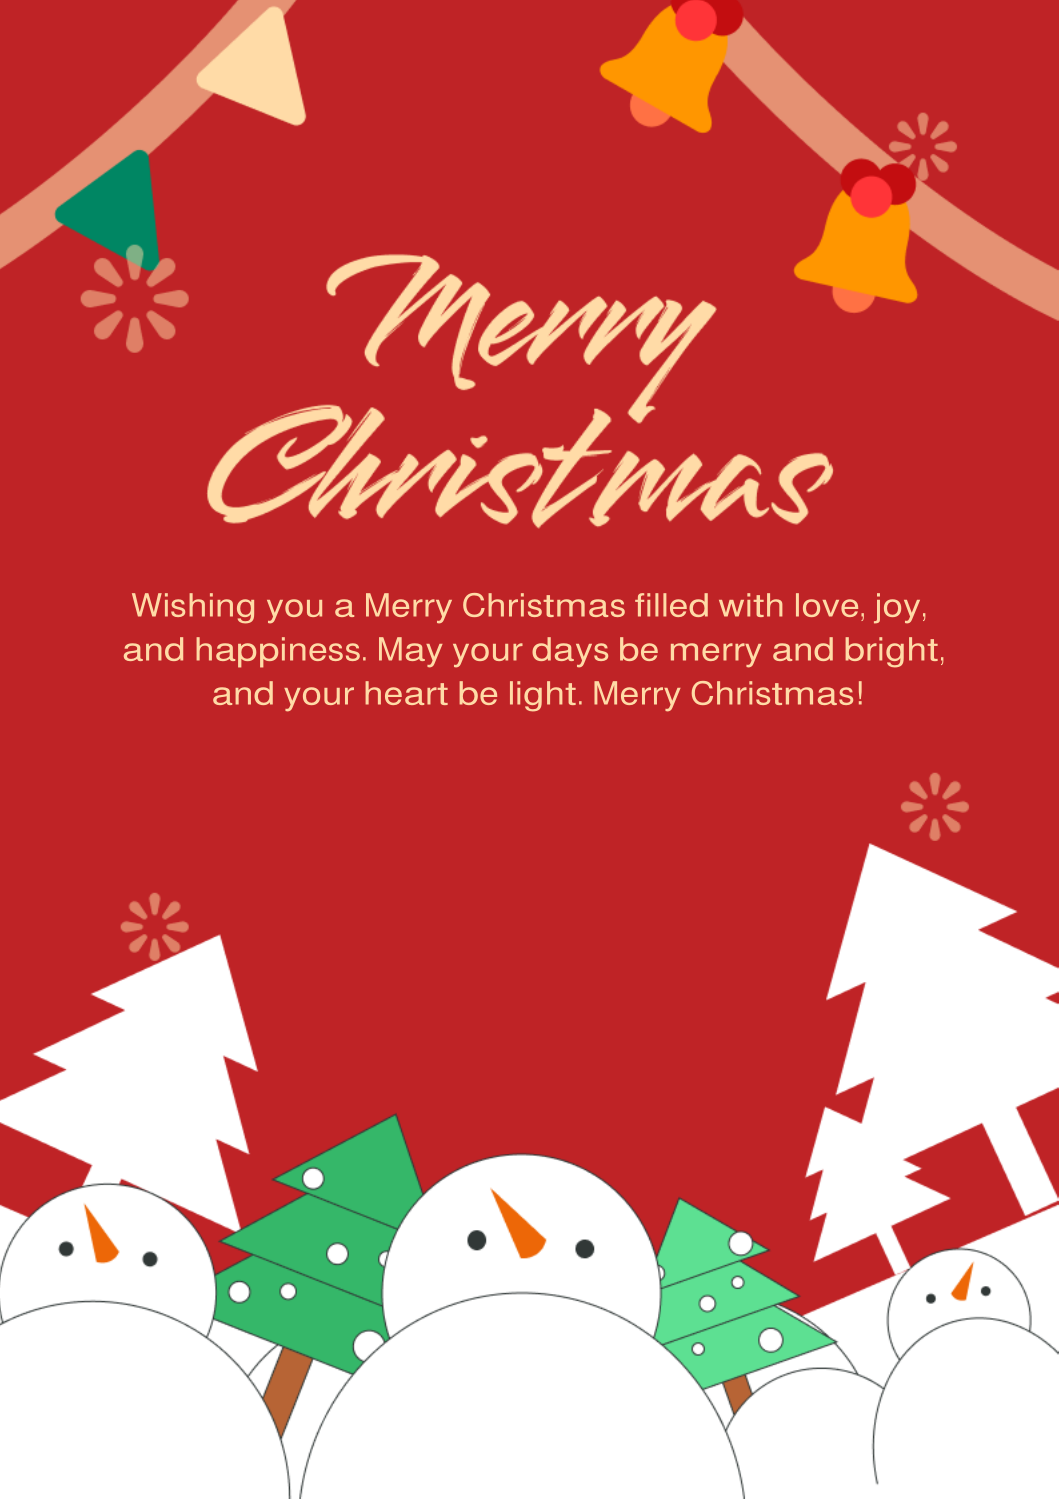 Heartfelt Christmas wishes for family